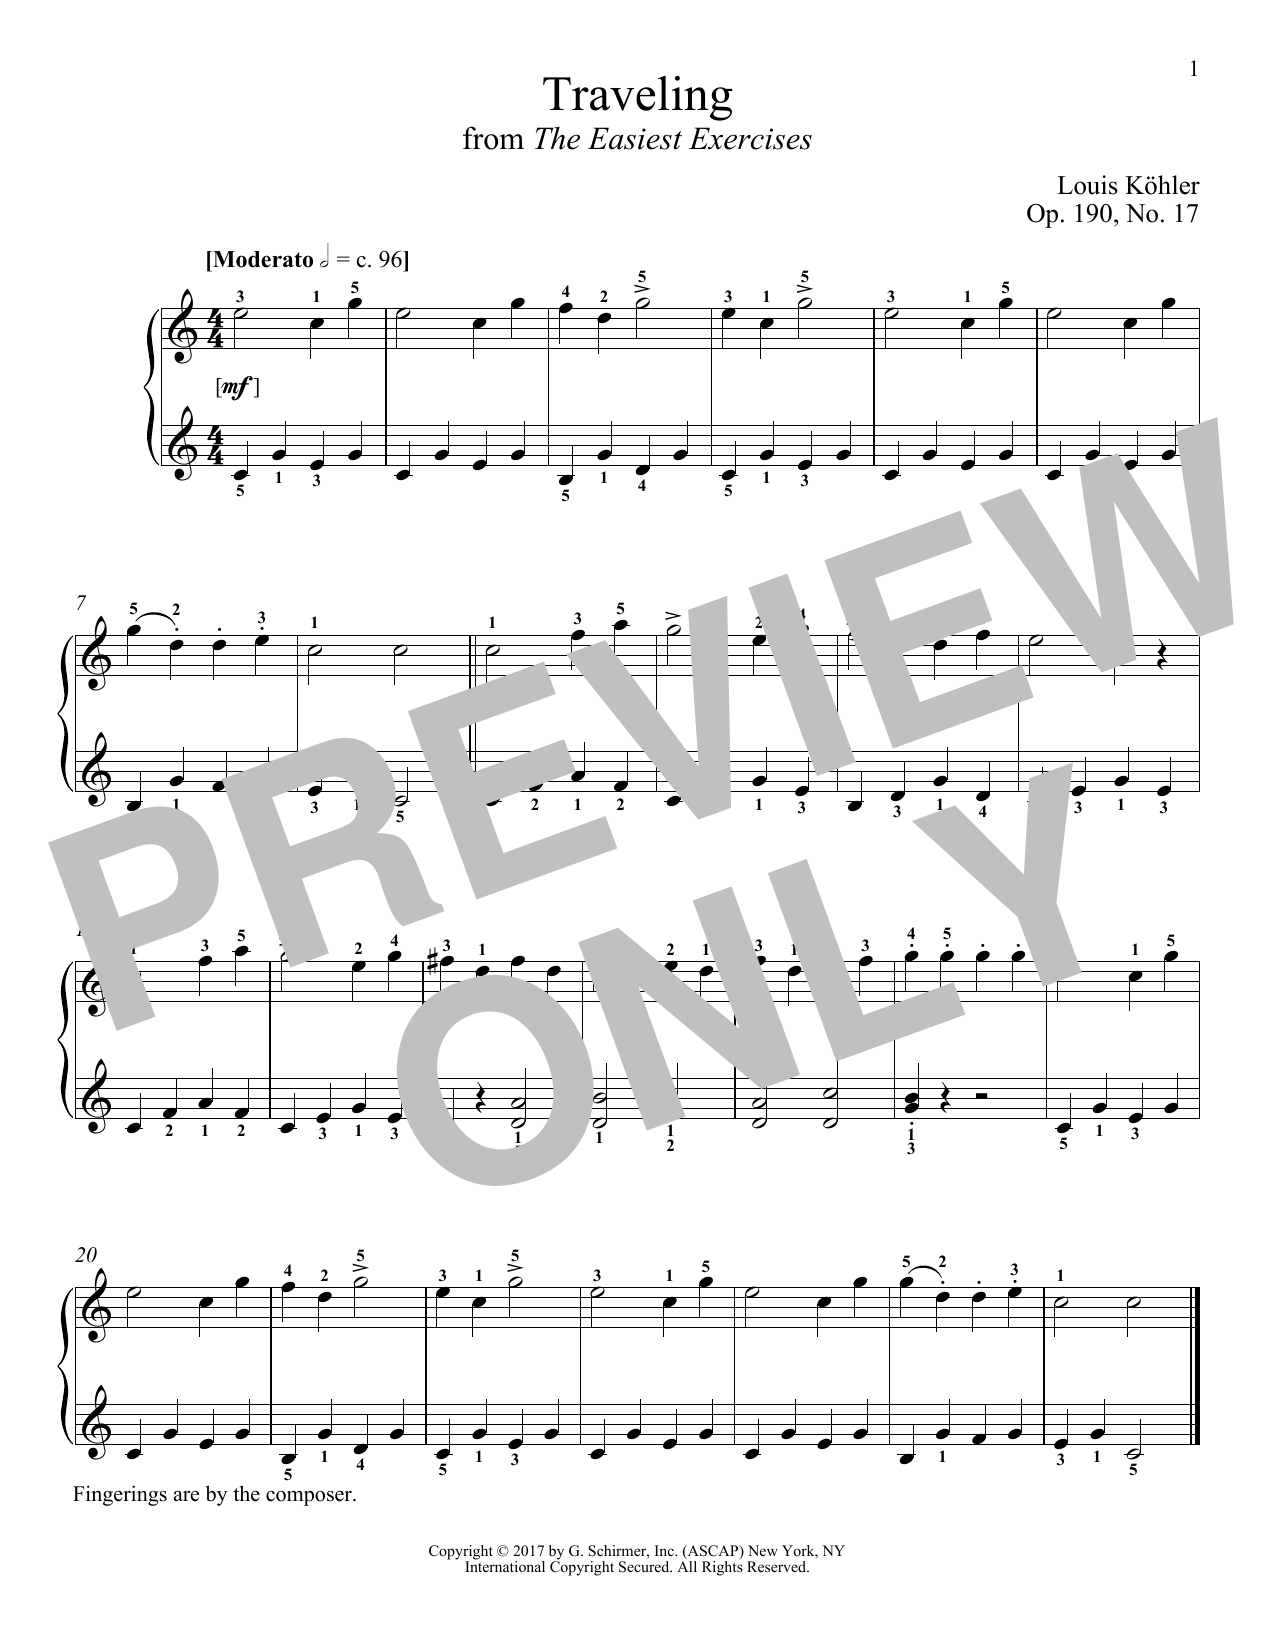 Louis Kohler Traveling, Op. 190, No. 17 Sheet Music Notes & Chords for Piano - Download or Print PDF